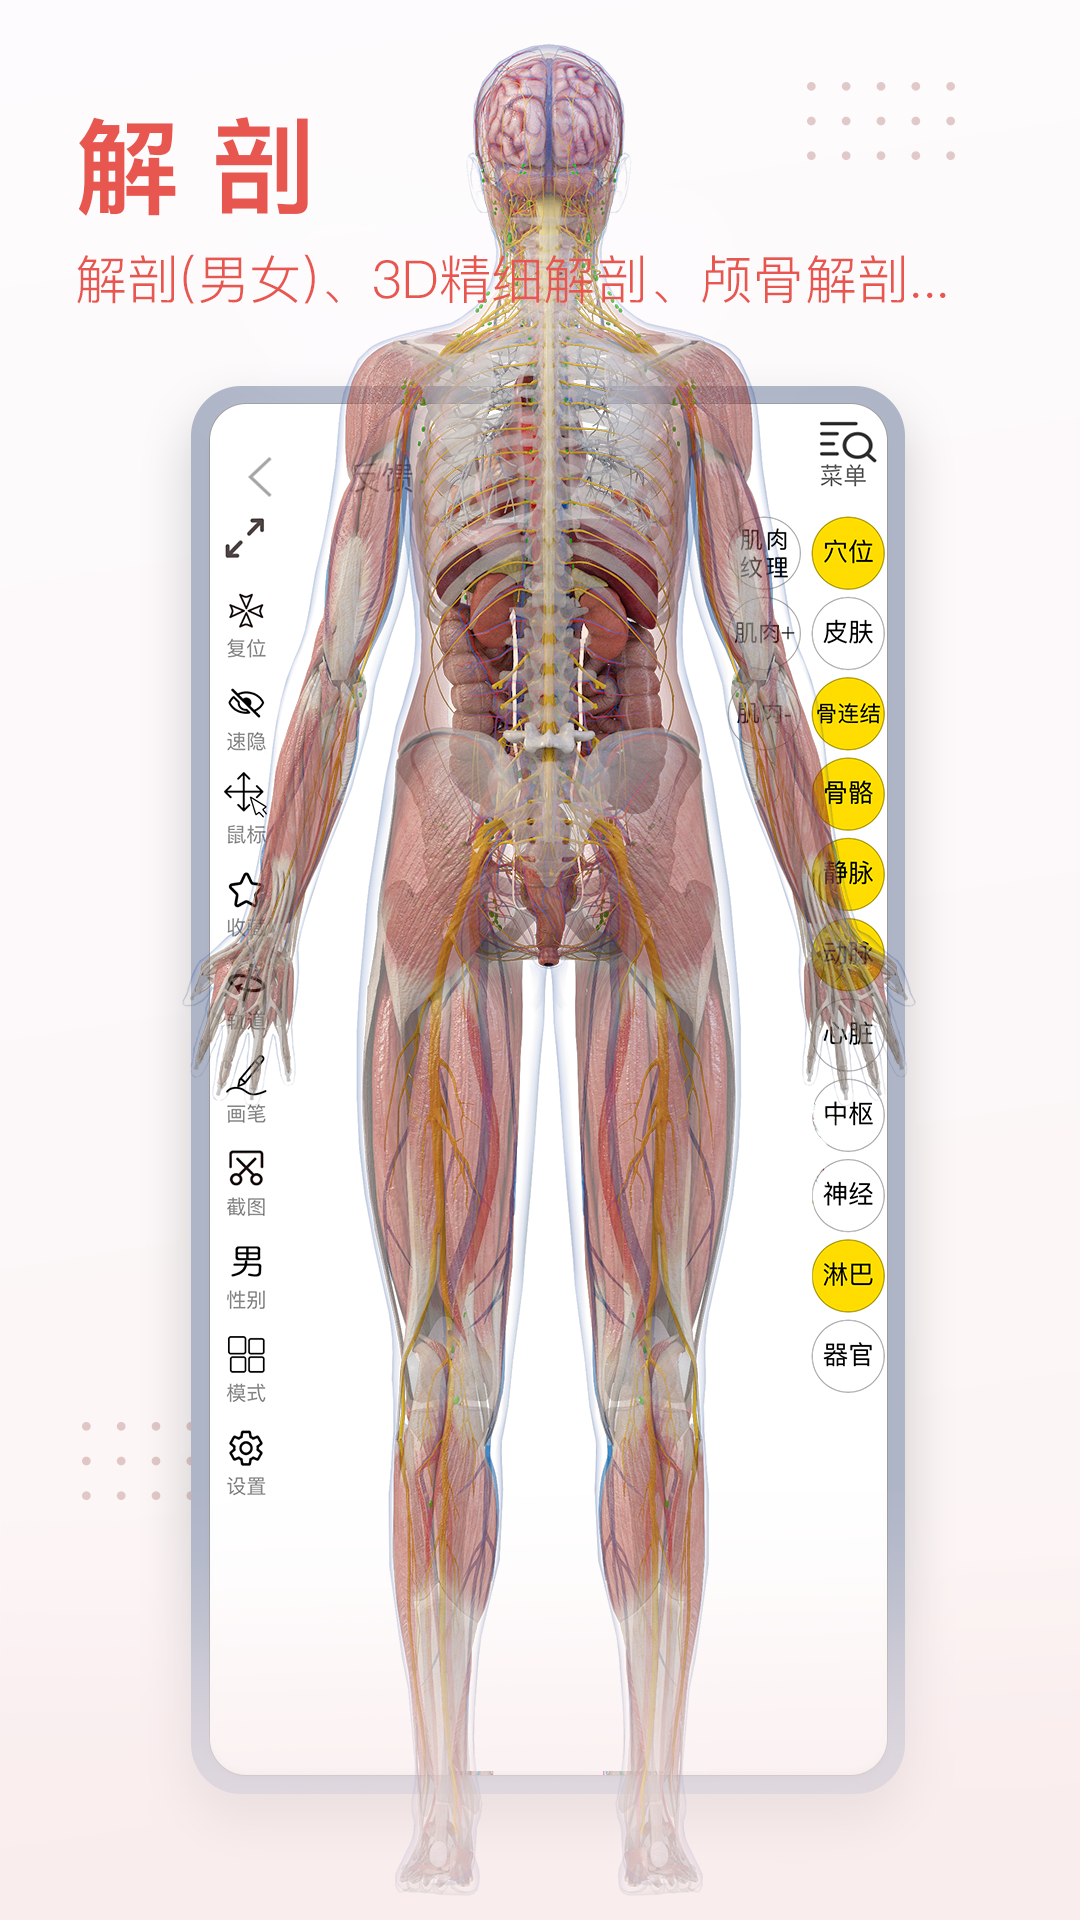 3DBody解剖v8.8.13截图5